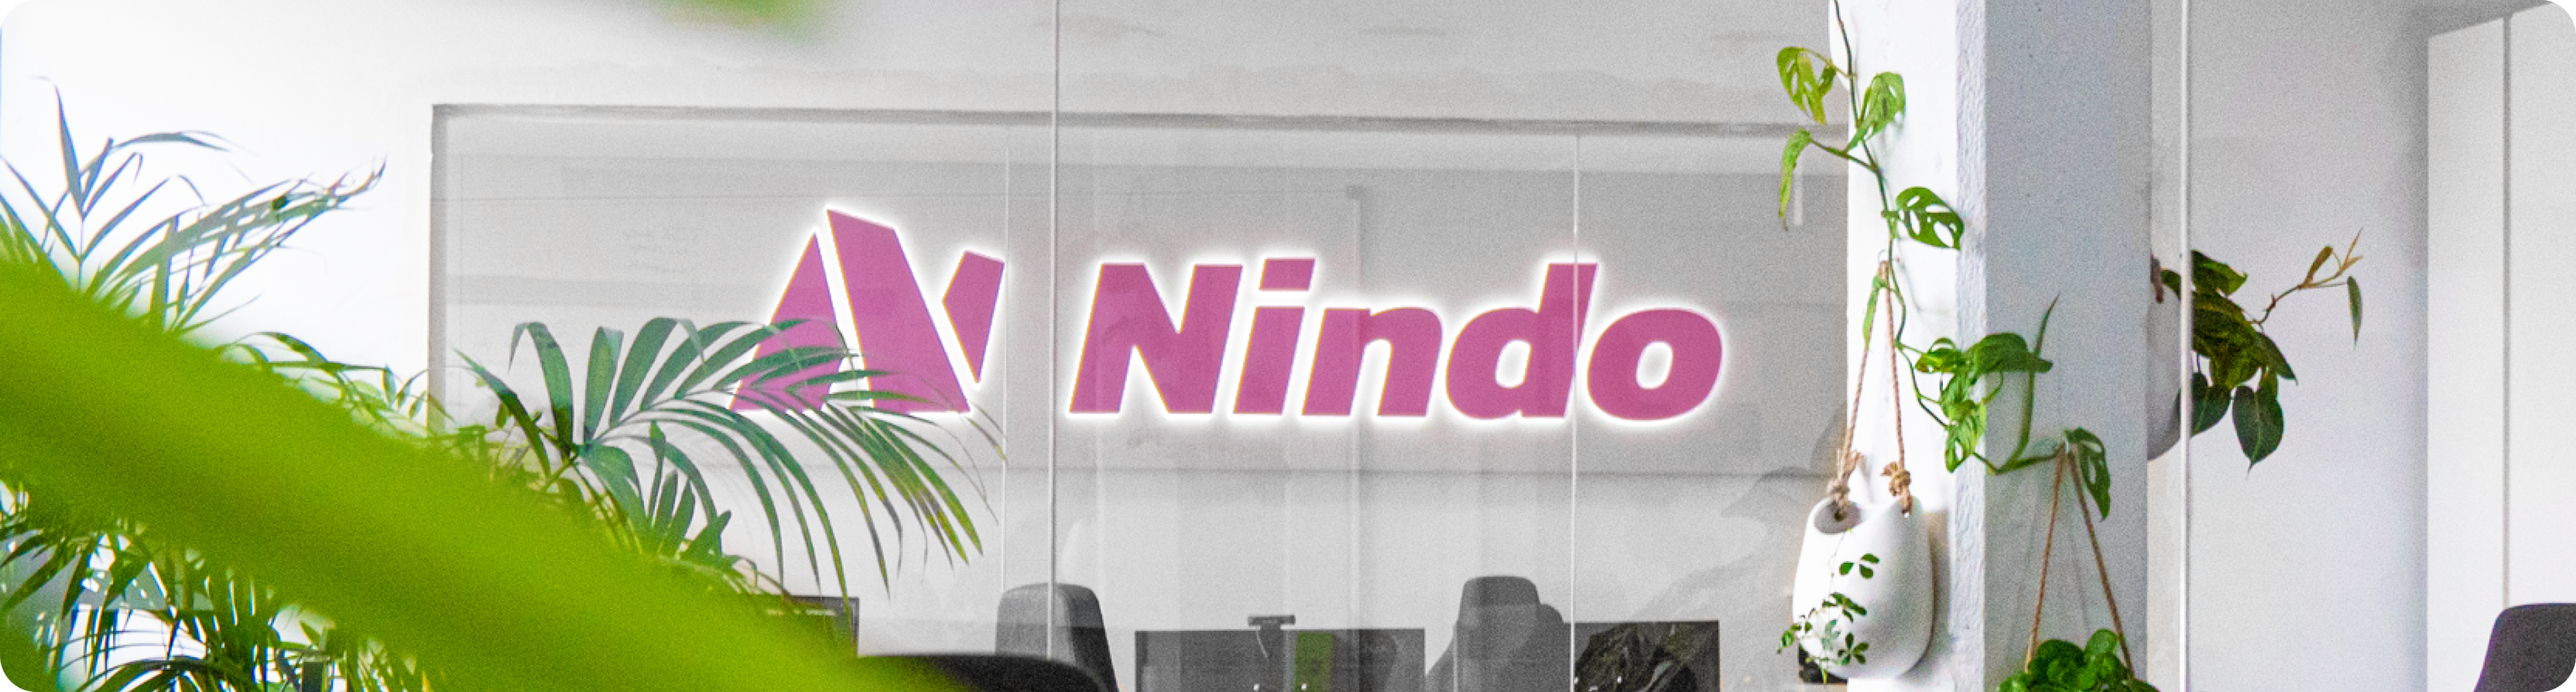 Foto vom Nindo Logo im Büro